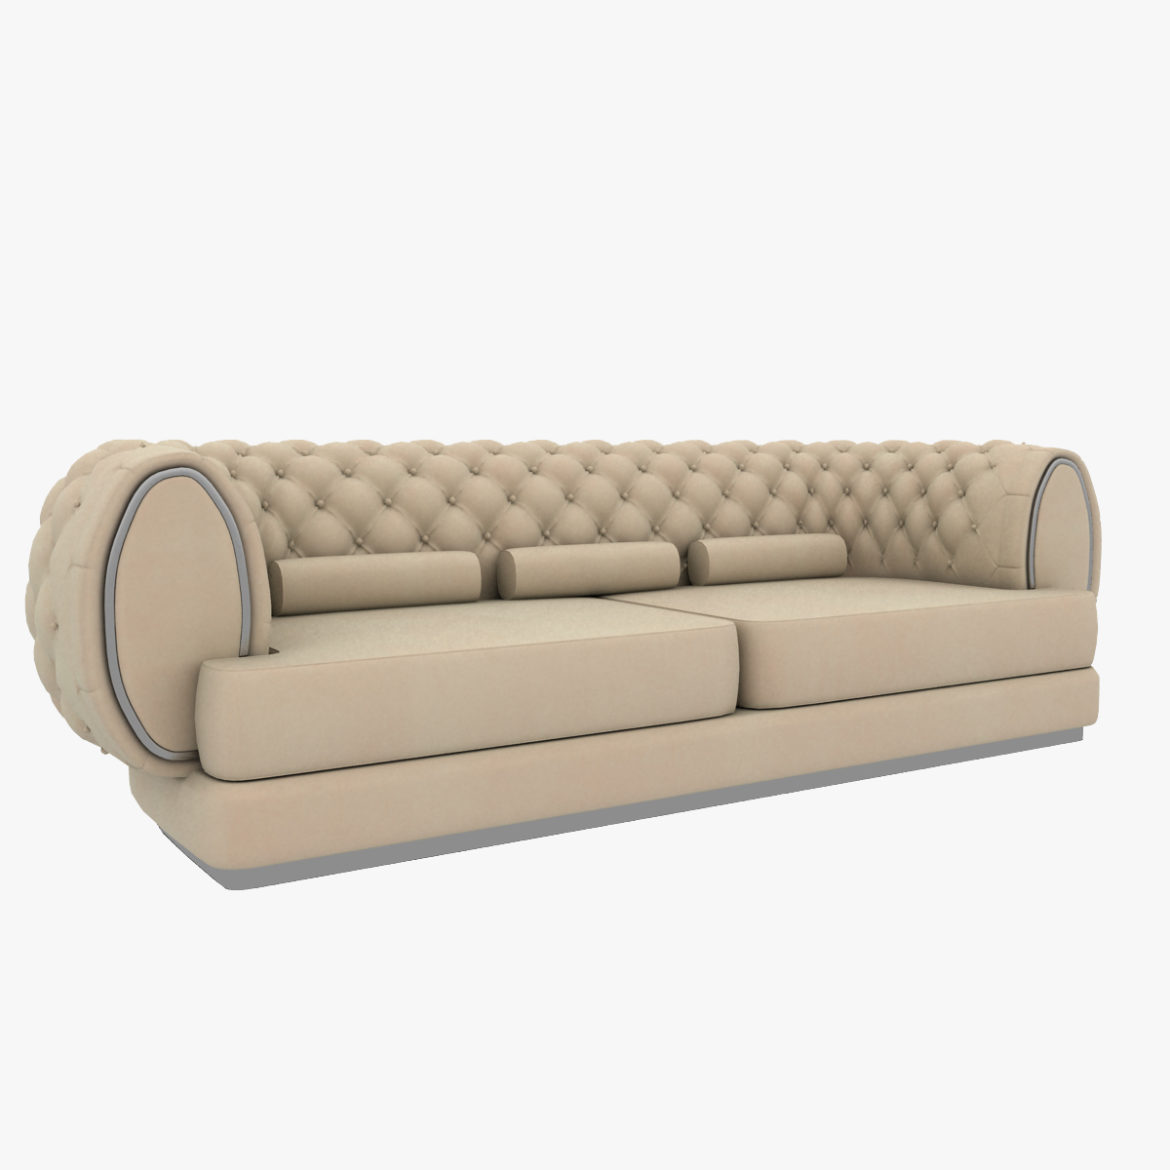 luxury sofa 3d model 3ds max fbx obj 293913